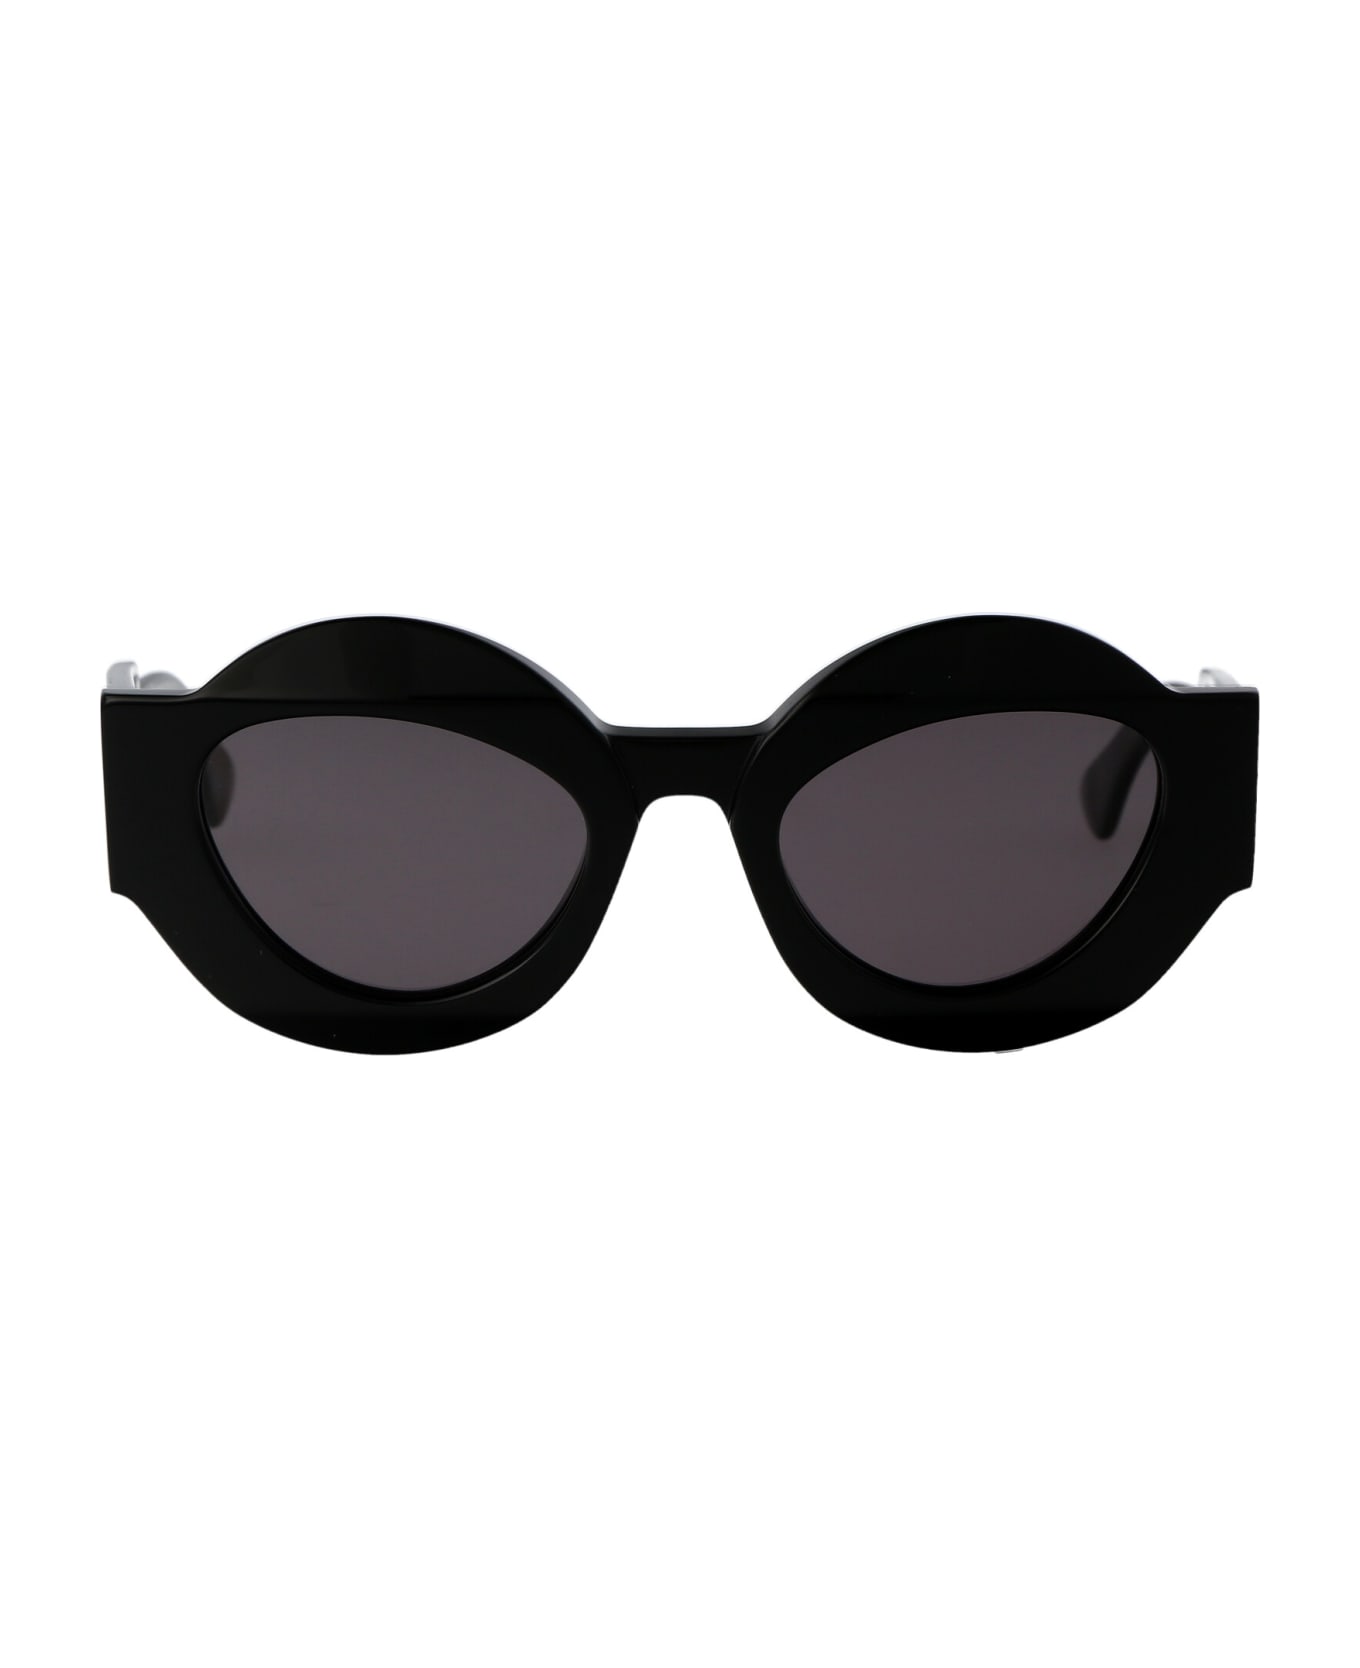 Kuboraum Maske X22 Sunglasses -  BS 2grey